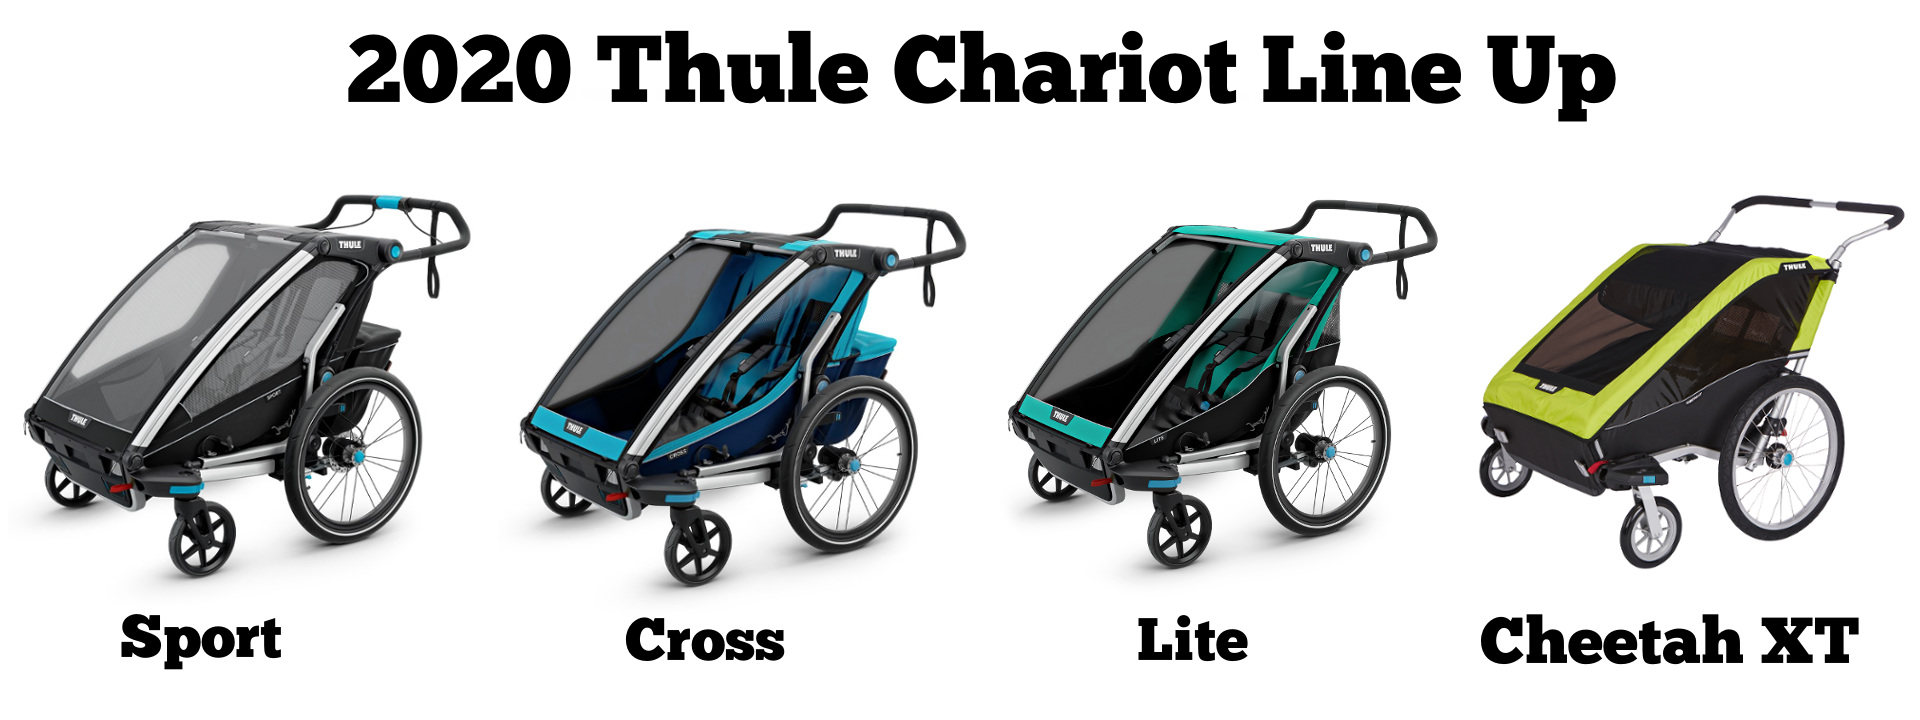 thule chariot cheetah xt